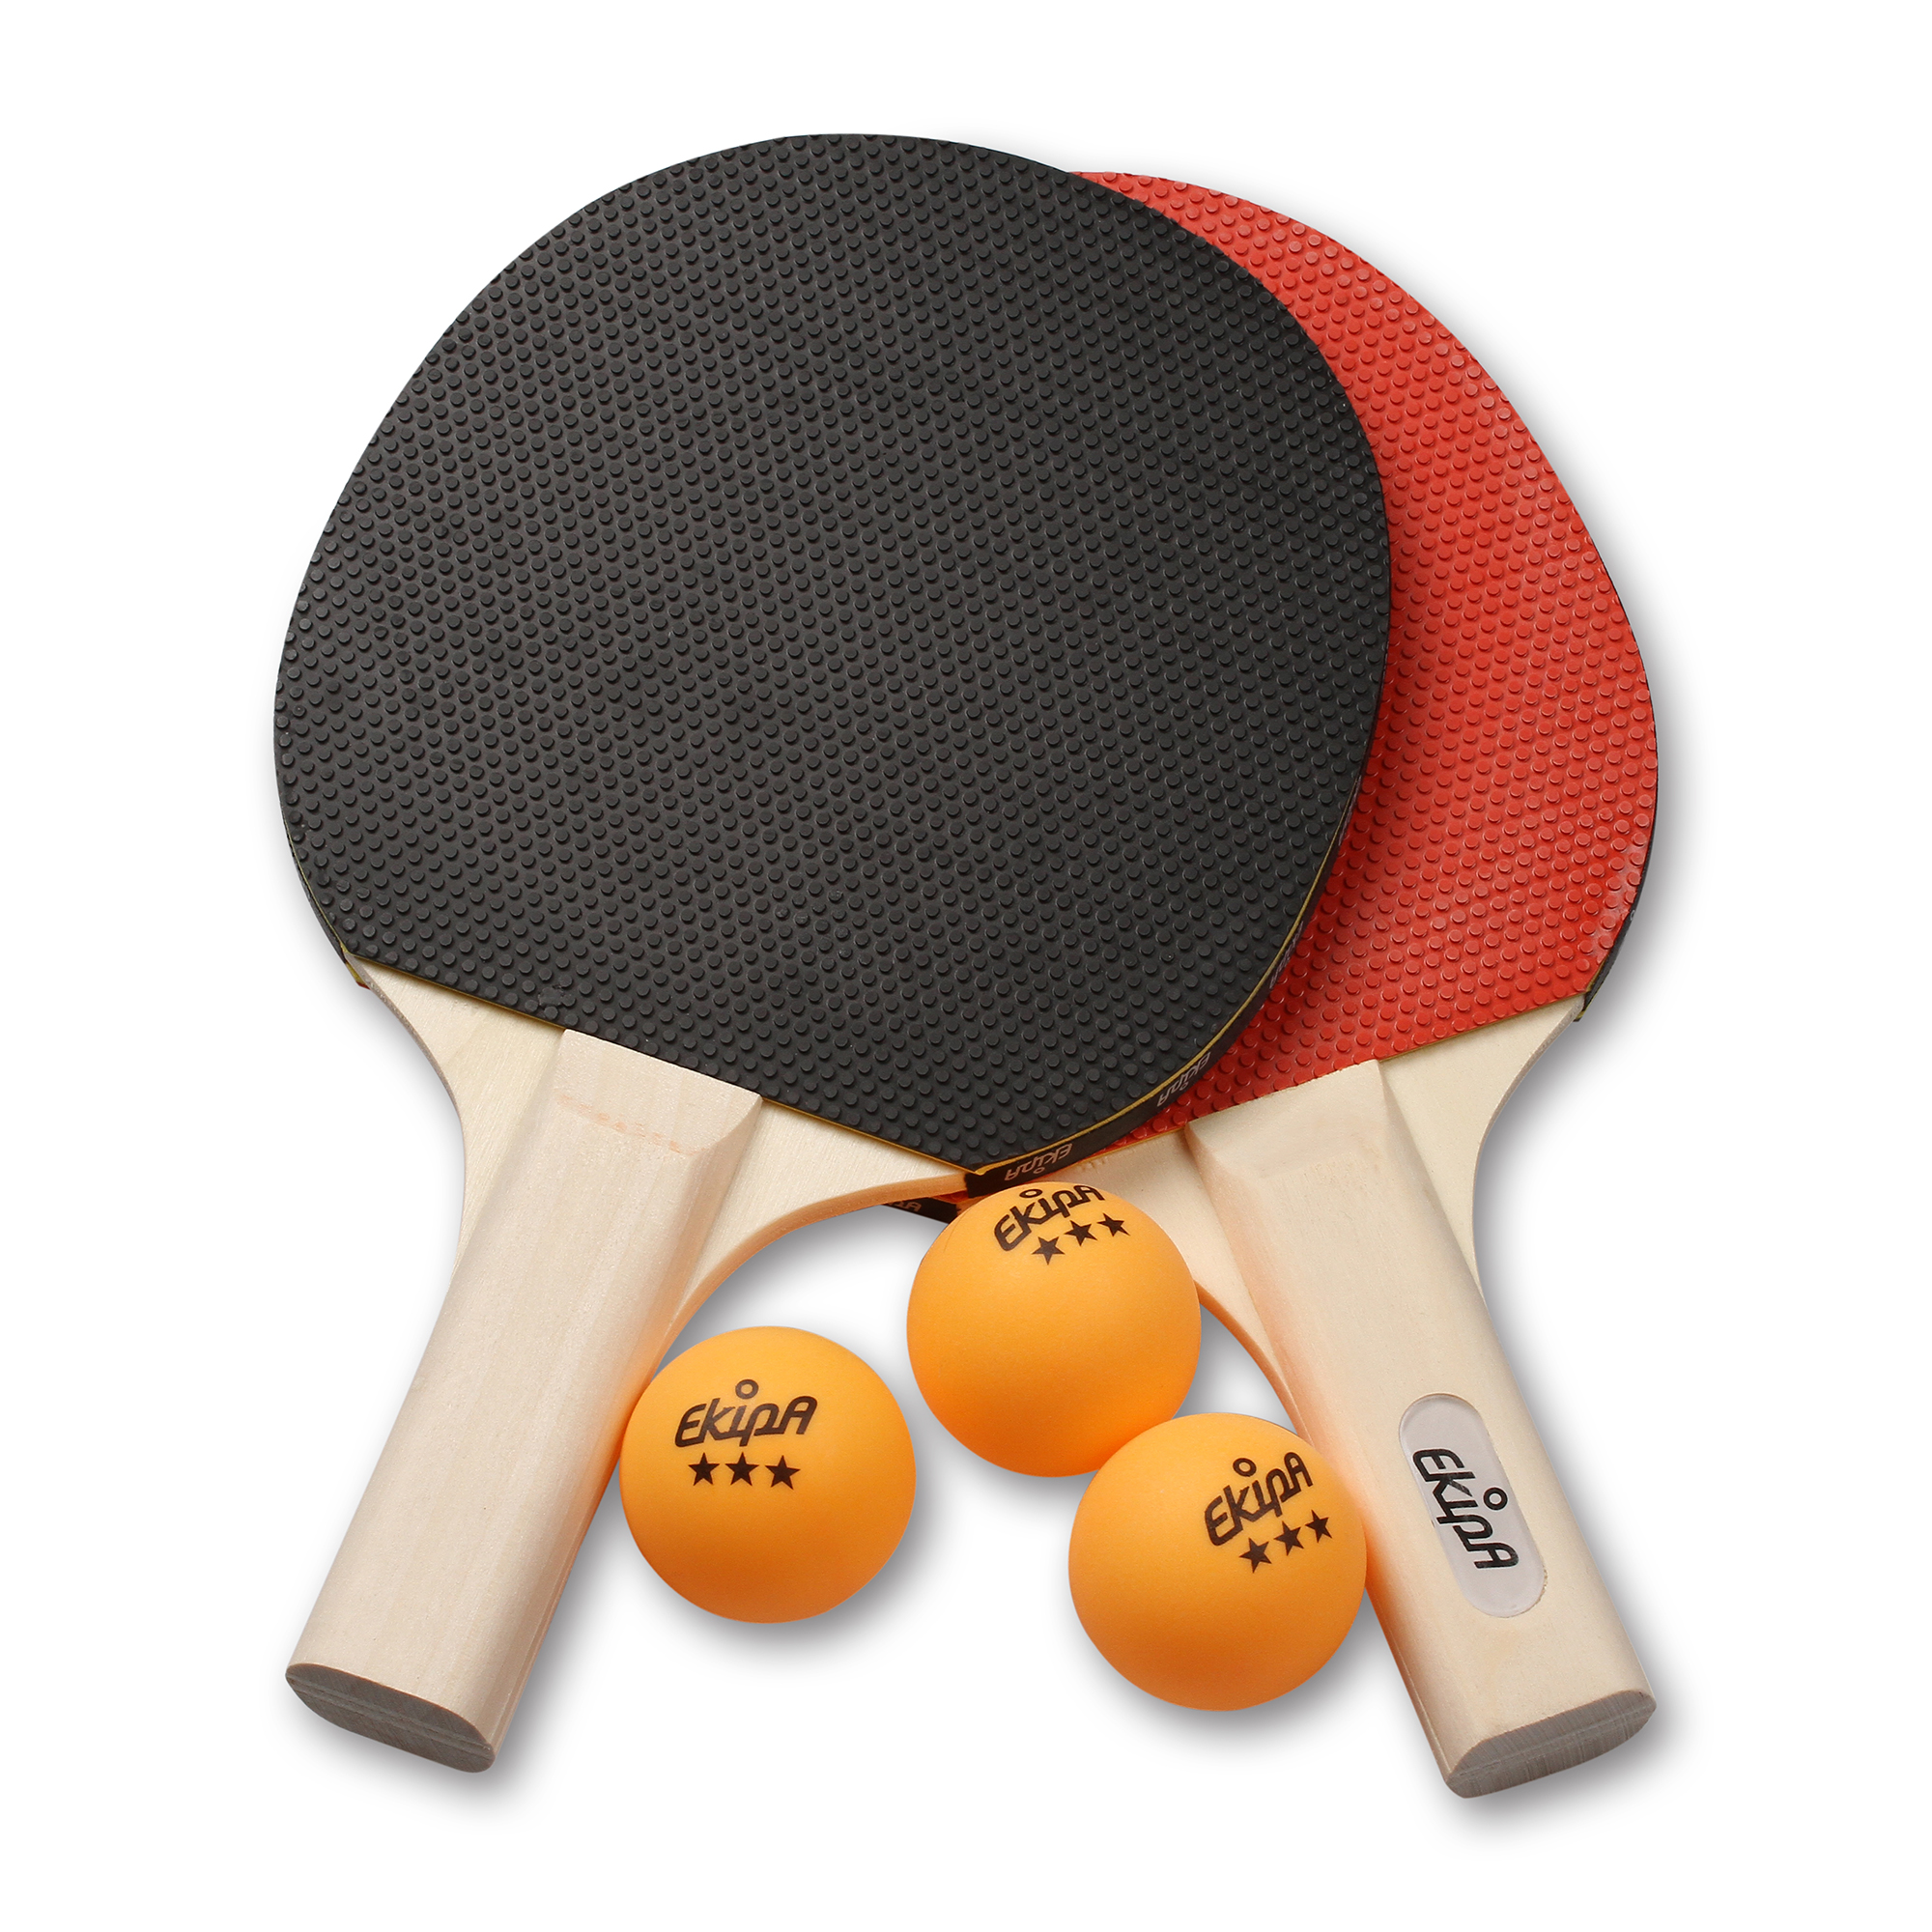 Комплект ракеток для настольного тенниса. Atemi 600 ракетка для настольного тенниса 3 звезды. Ракетка RBV 4002h для настольного тенниса. Теннисная ракетка атеми. Набор для настольного тенниса (2 ракетки, 3 шарика).